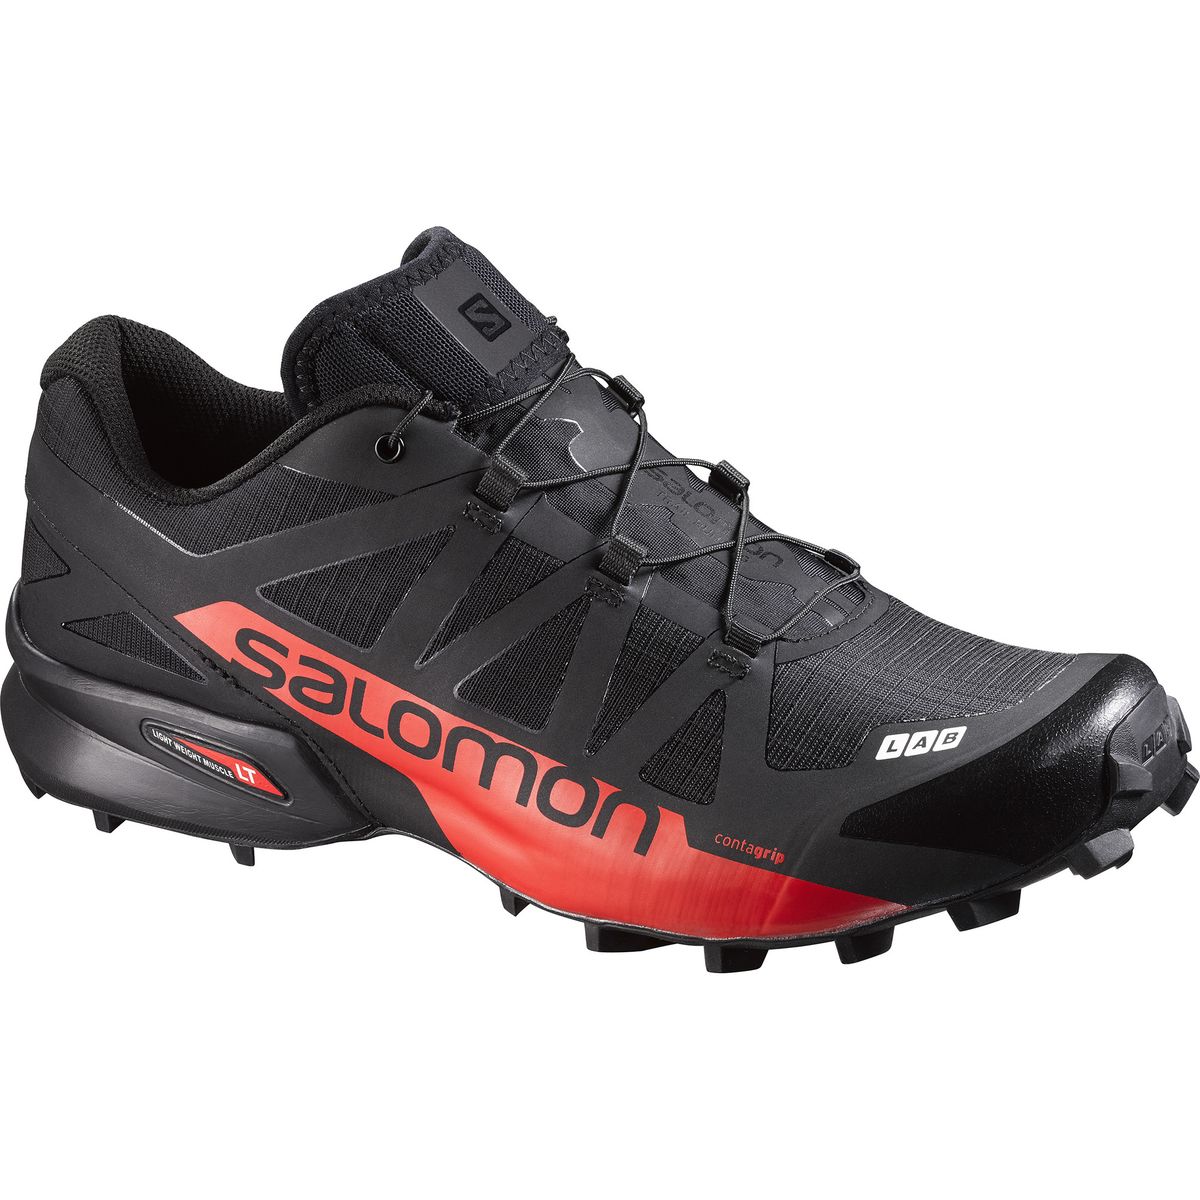 Salomon S Lab Speedcross Trail Running Shoe Men's